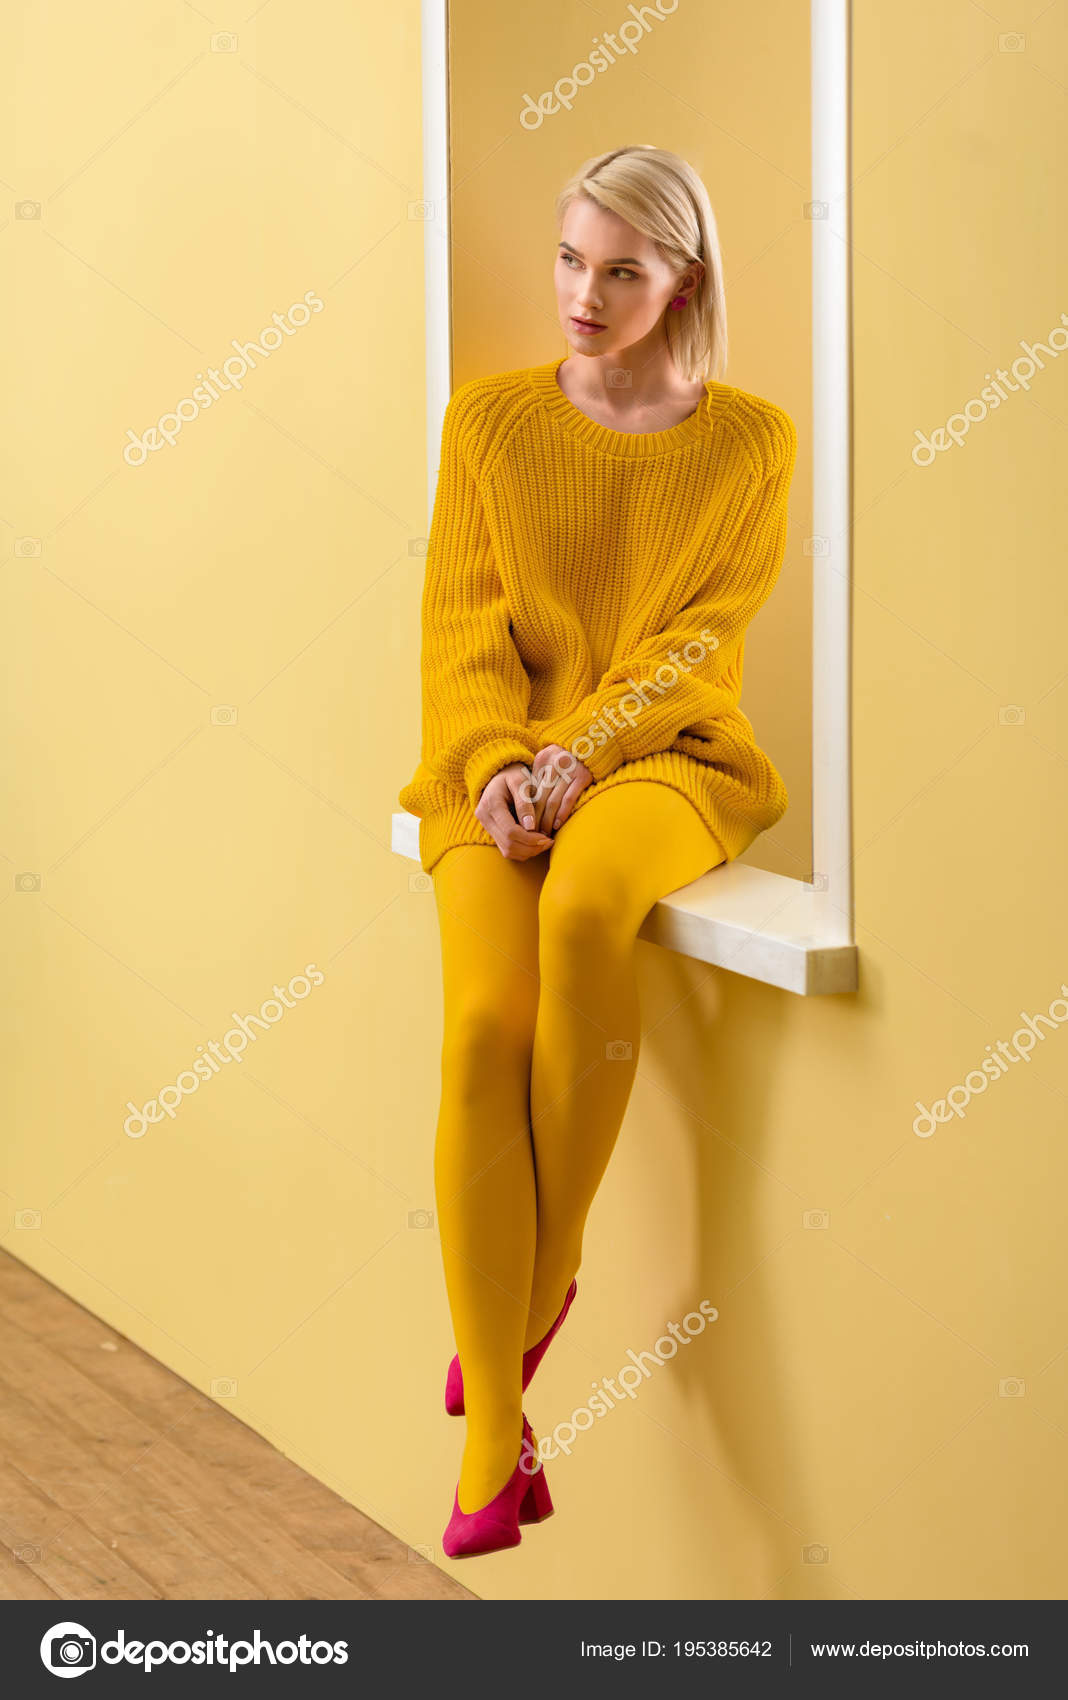 https://st3.depositphotos.com/13194036/19538/i/1600/depositphotos_195385642-stock-photo-stylish-pensive-woman-yellow-sweater.jpg